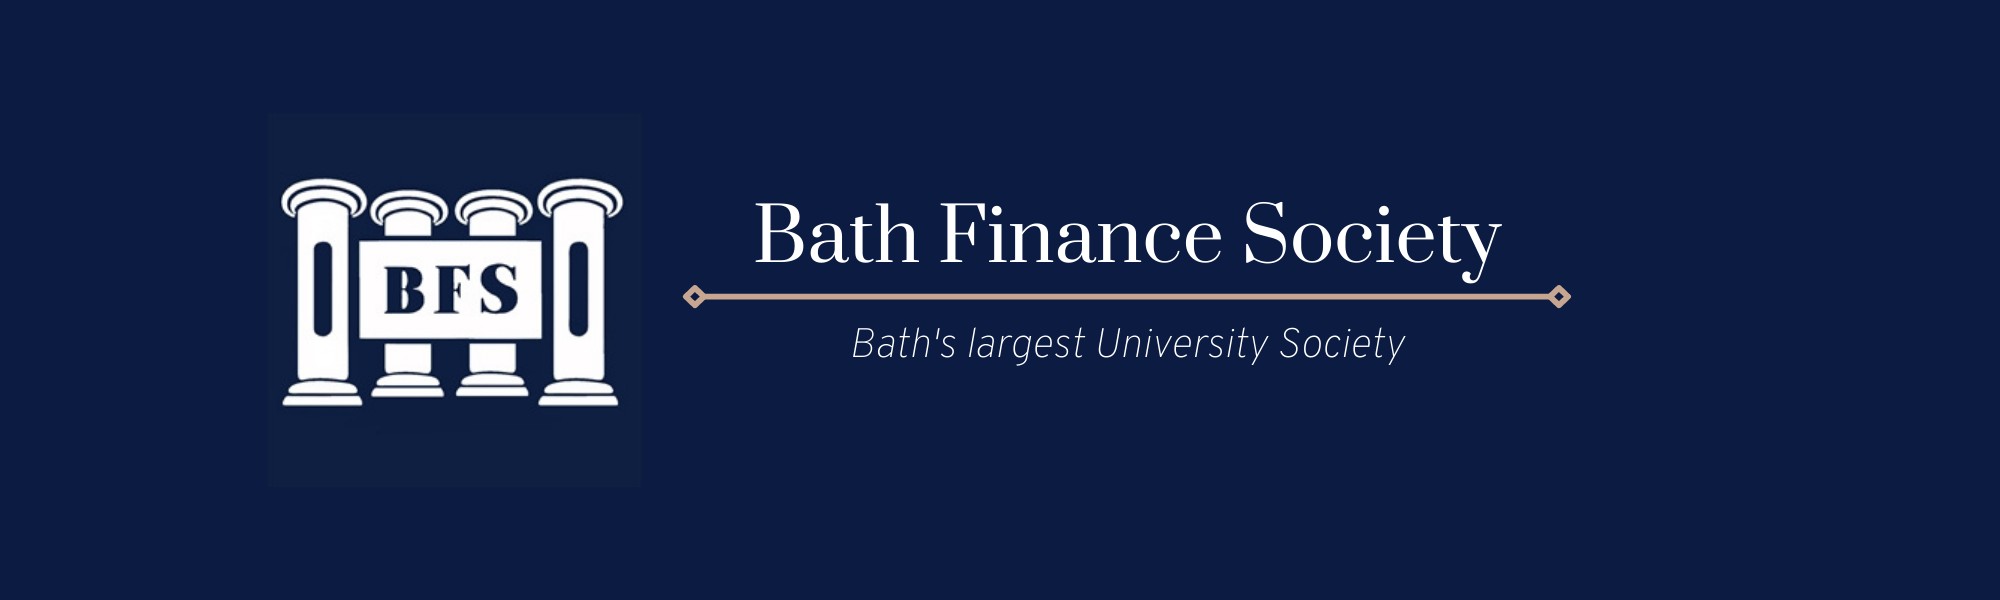 Banner for Bath Finance Society 